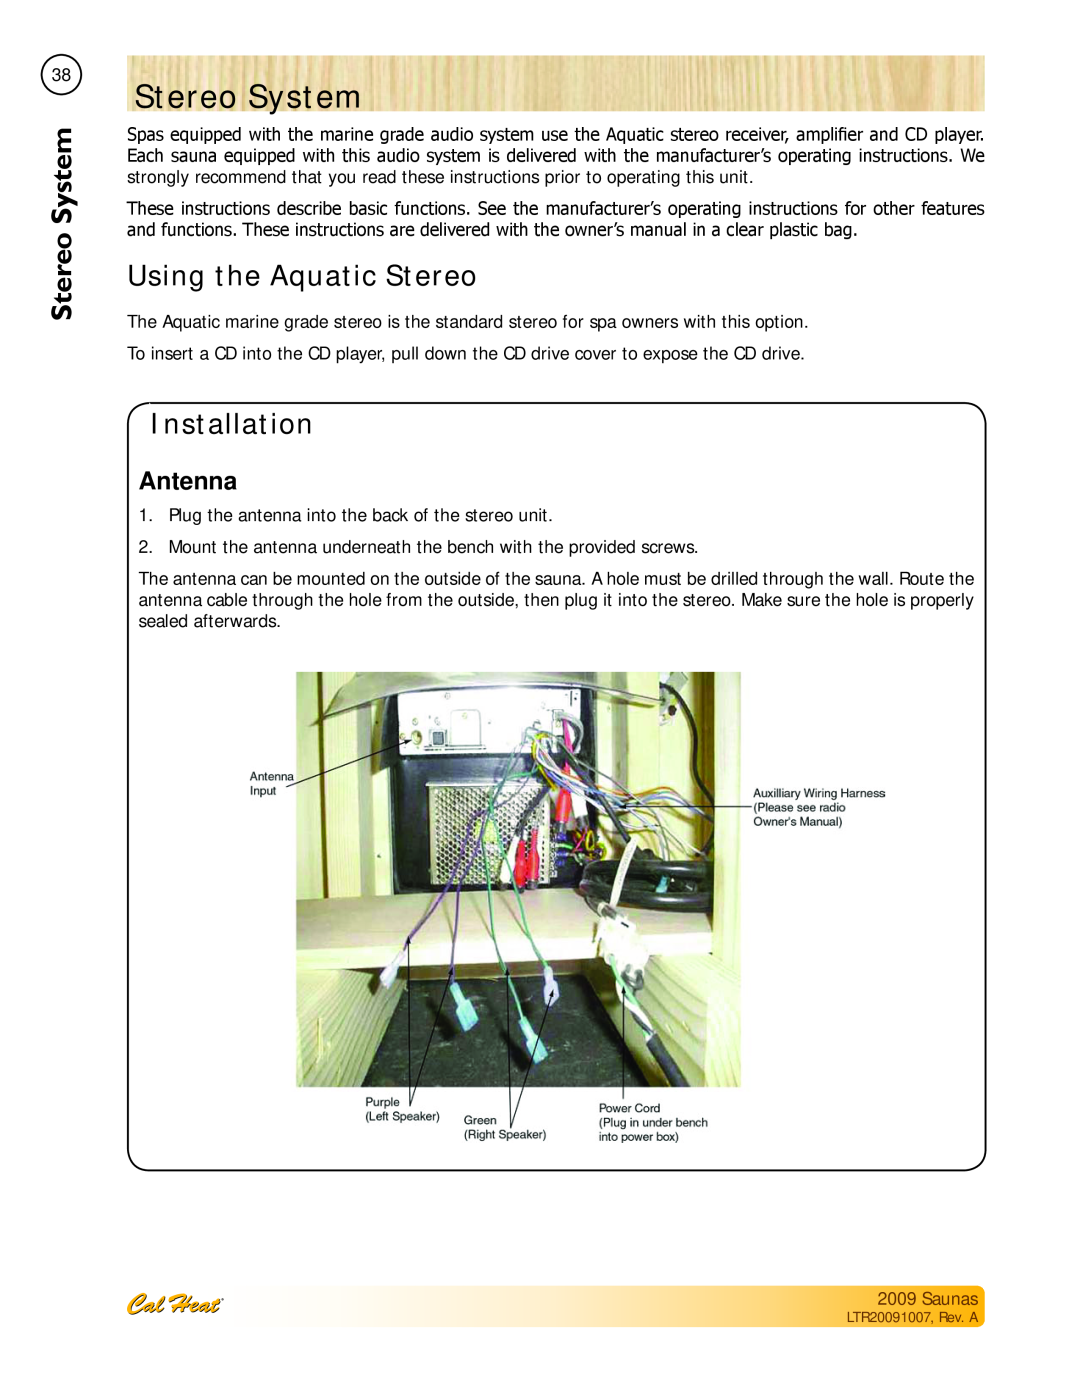 Cal Spas Saunas manual Stereo System, Using the Aquatic Stereo, Installation, Antenna 